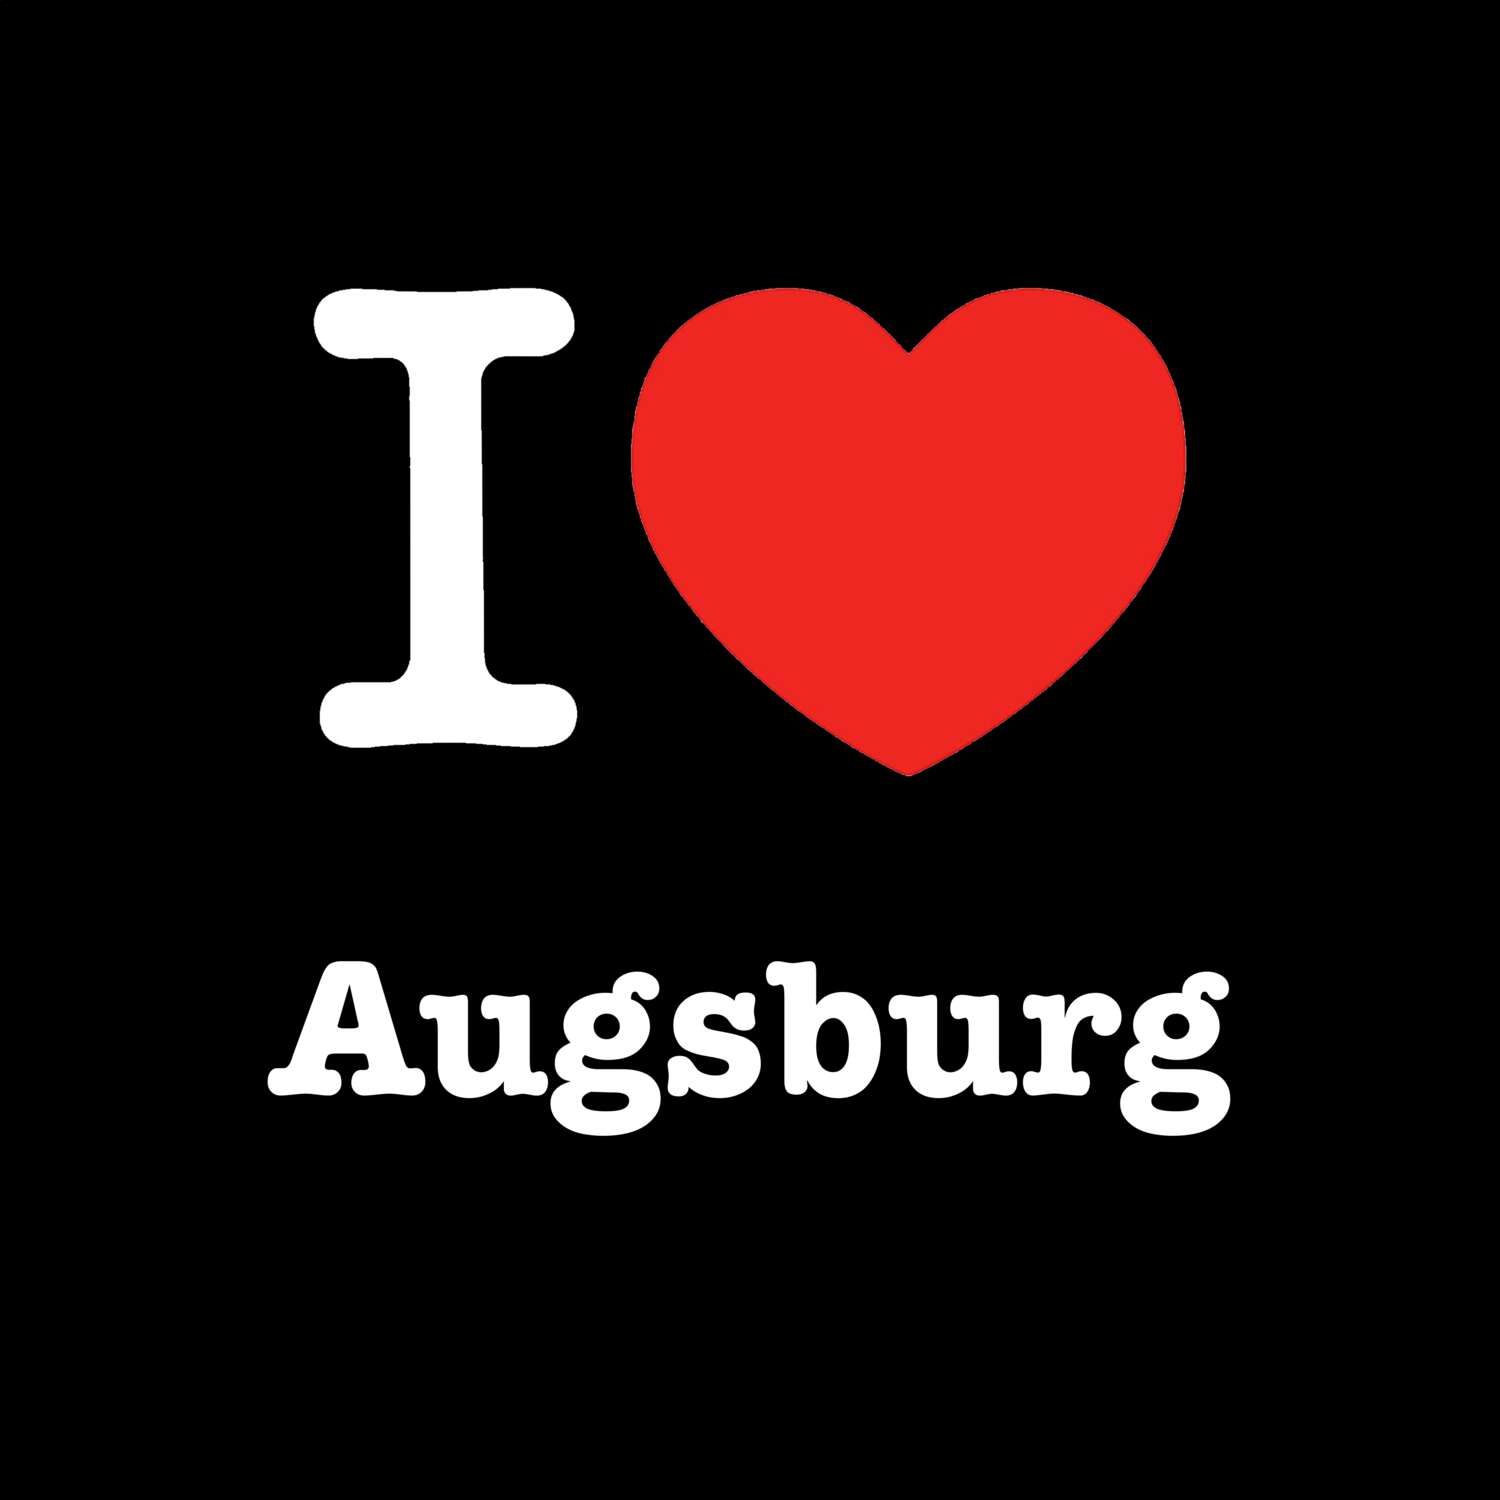 Augsburg T-Shirt »I love«